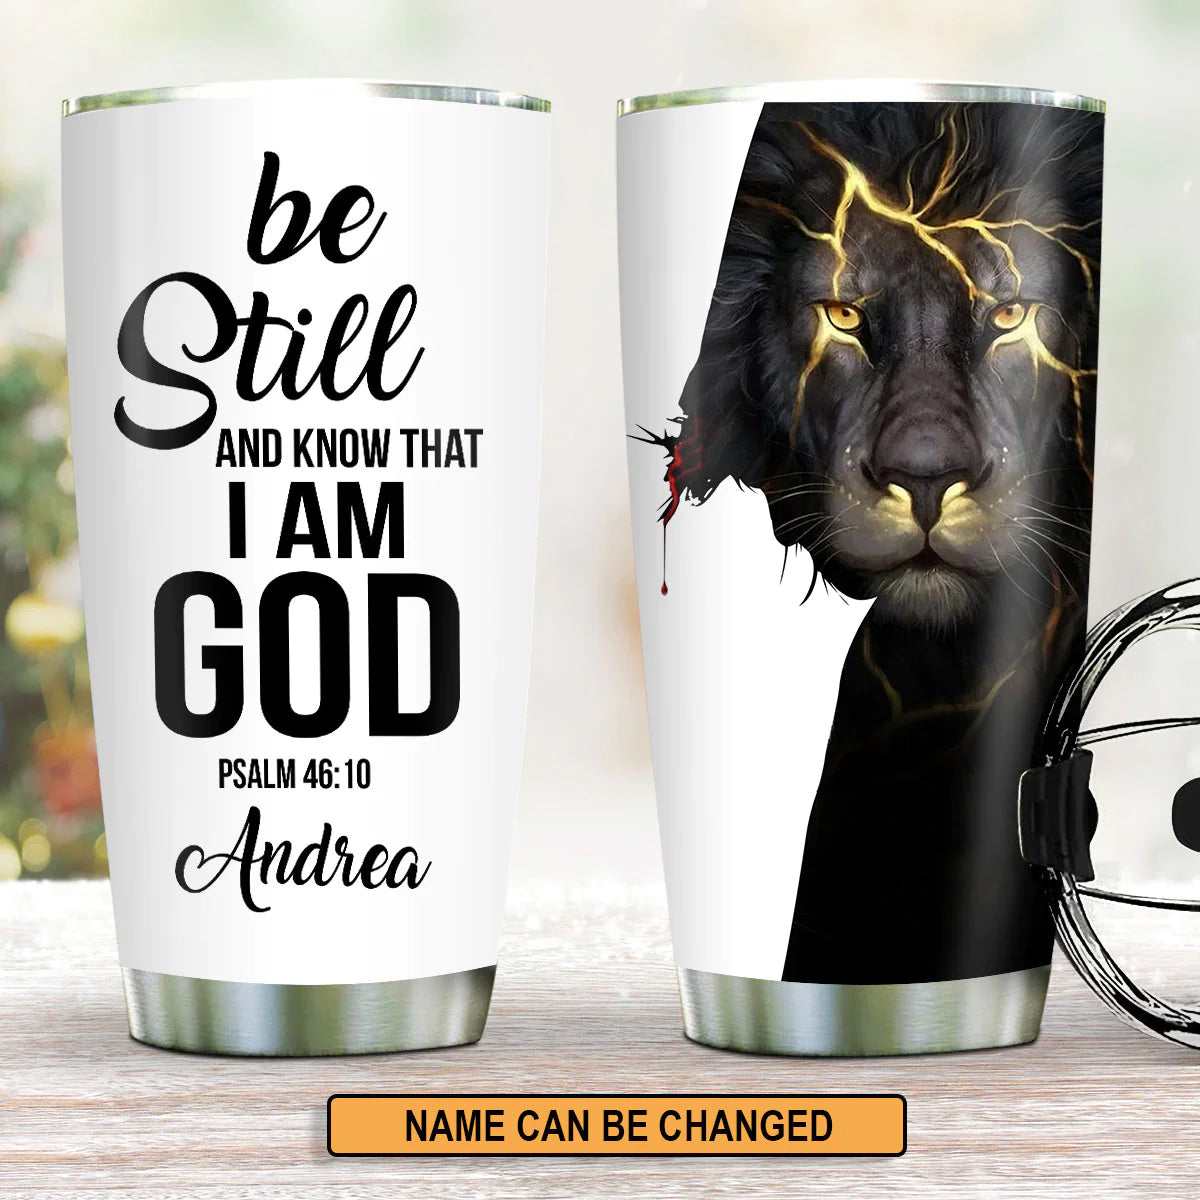 Christianartbag Drinkware, Be Still And Know That I Am GOD, Personalized Mug, Tumbler, Christmas Gift. - Christian Art Bag